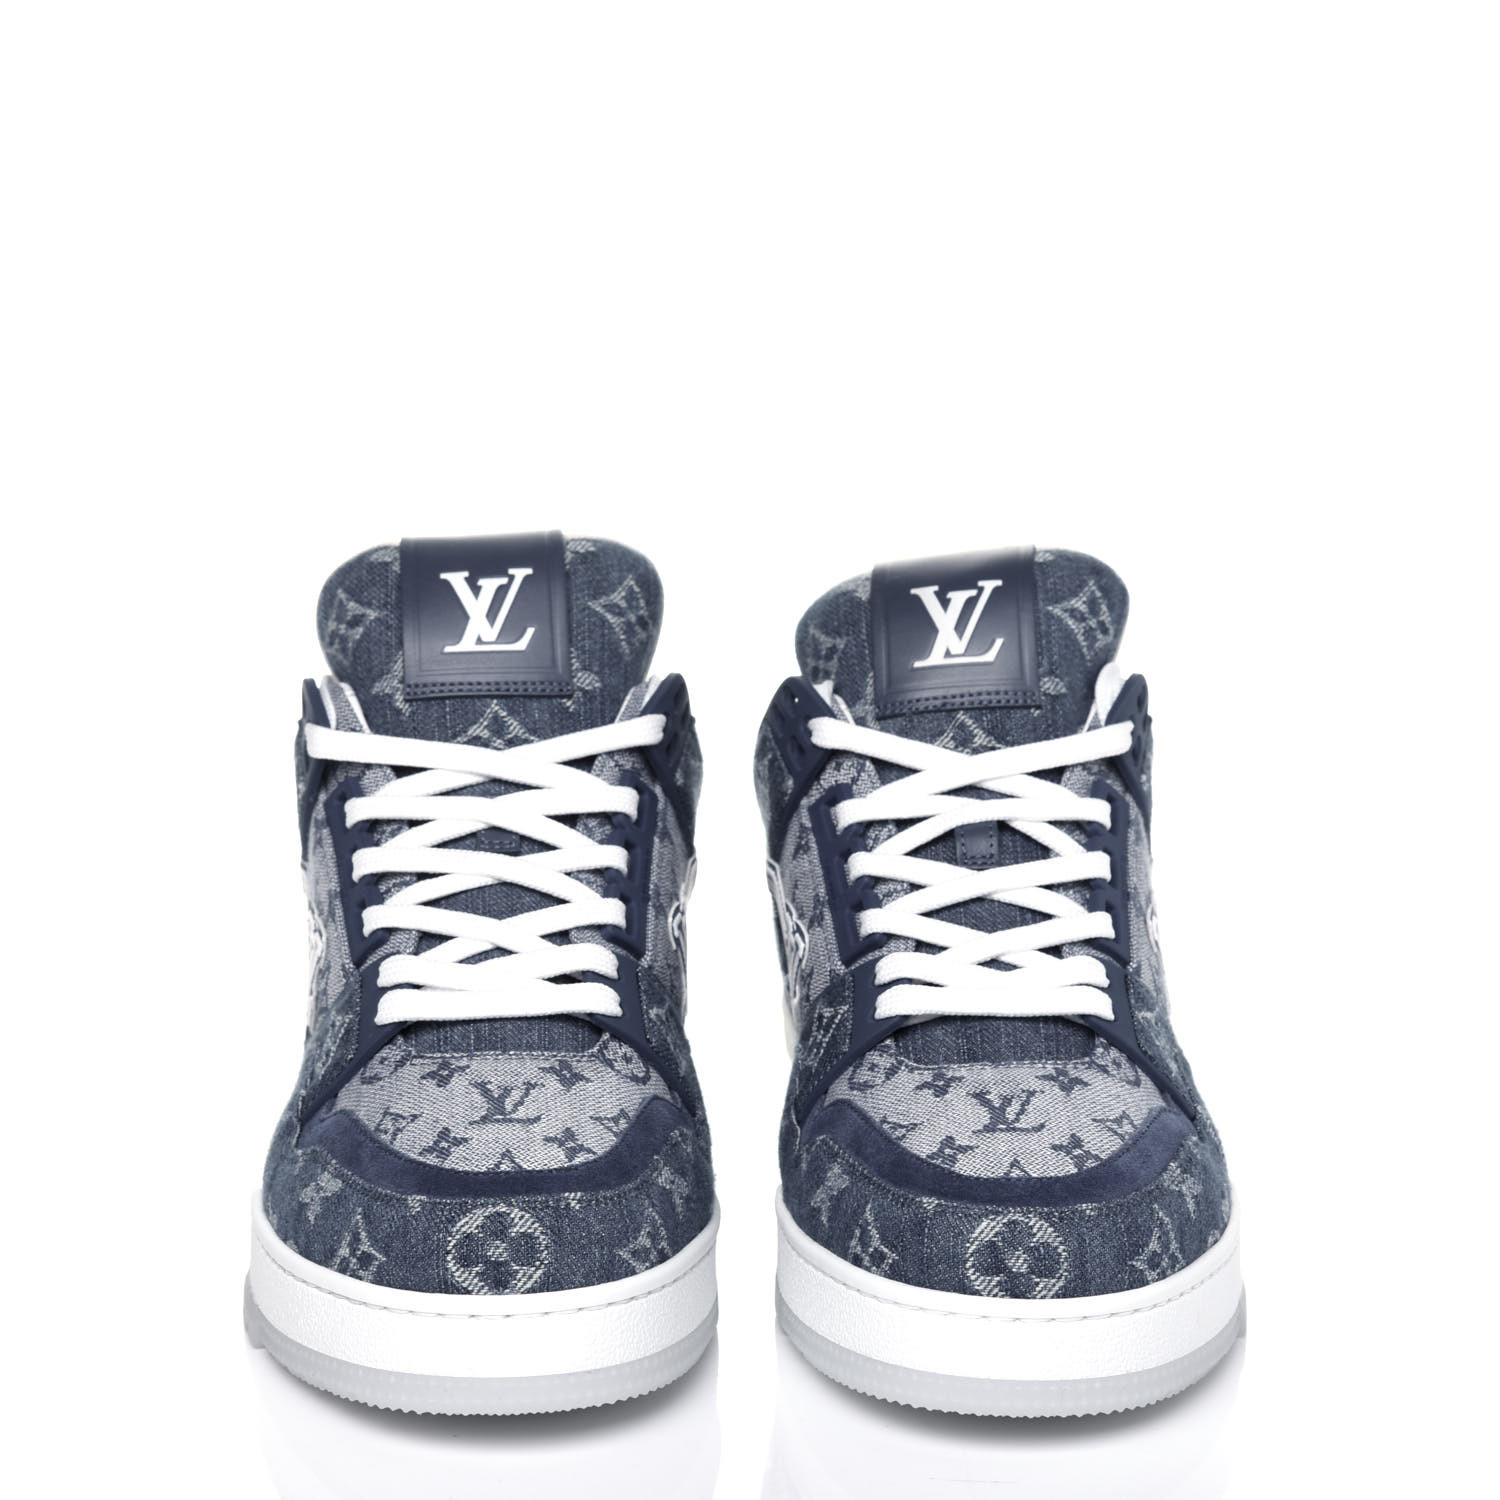 LV Monogram Denim Trainer Sneakers 1A7S51  Sneakers, Sneakers blue, Lv  sneakers mens